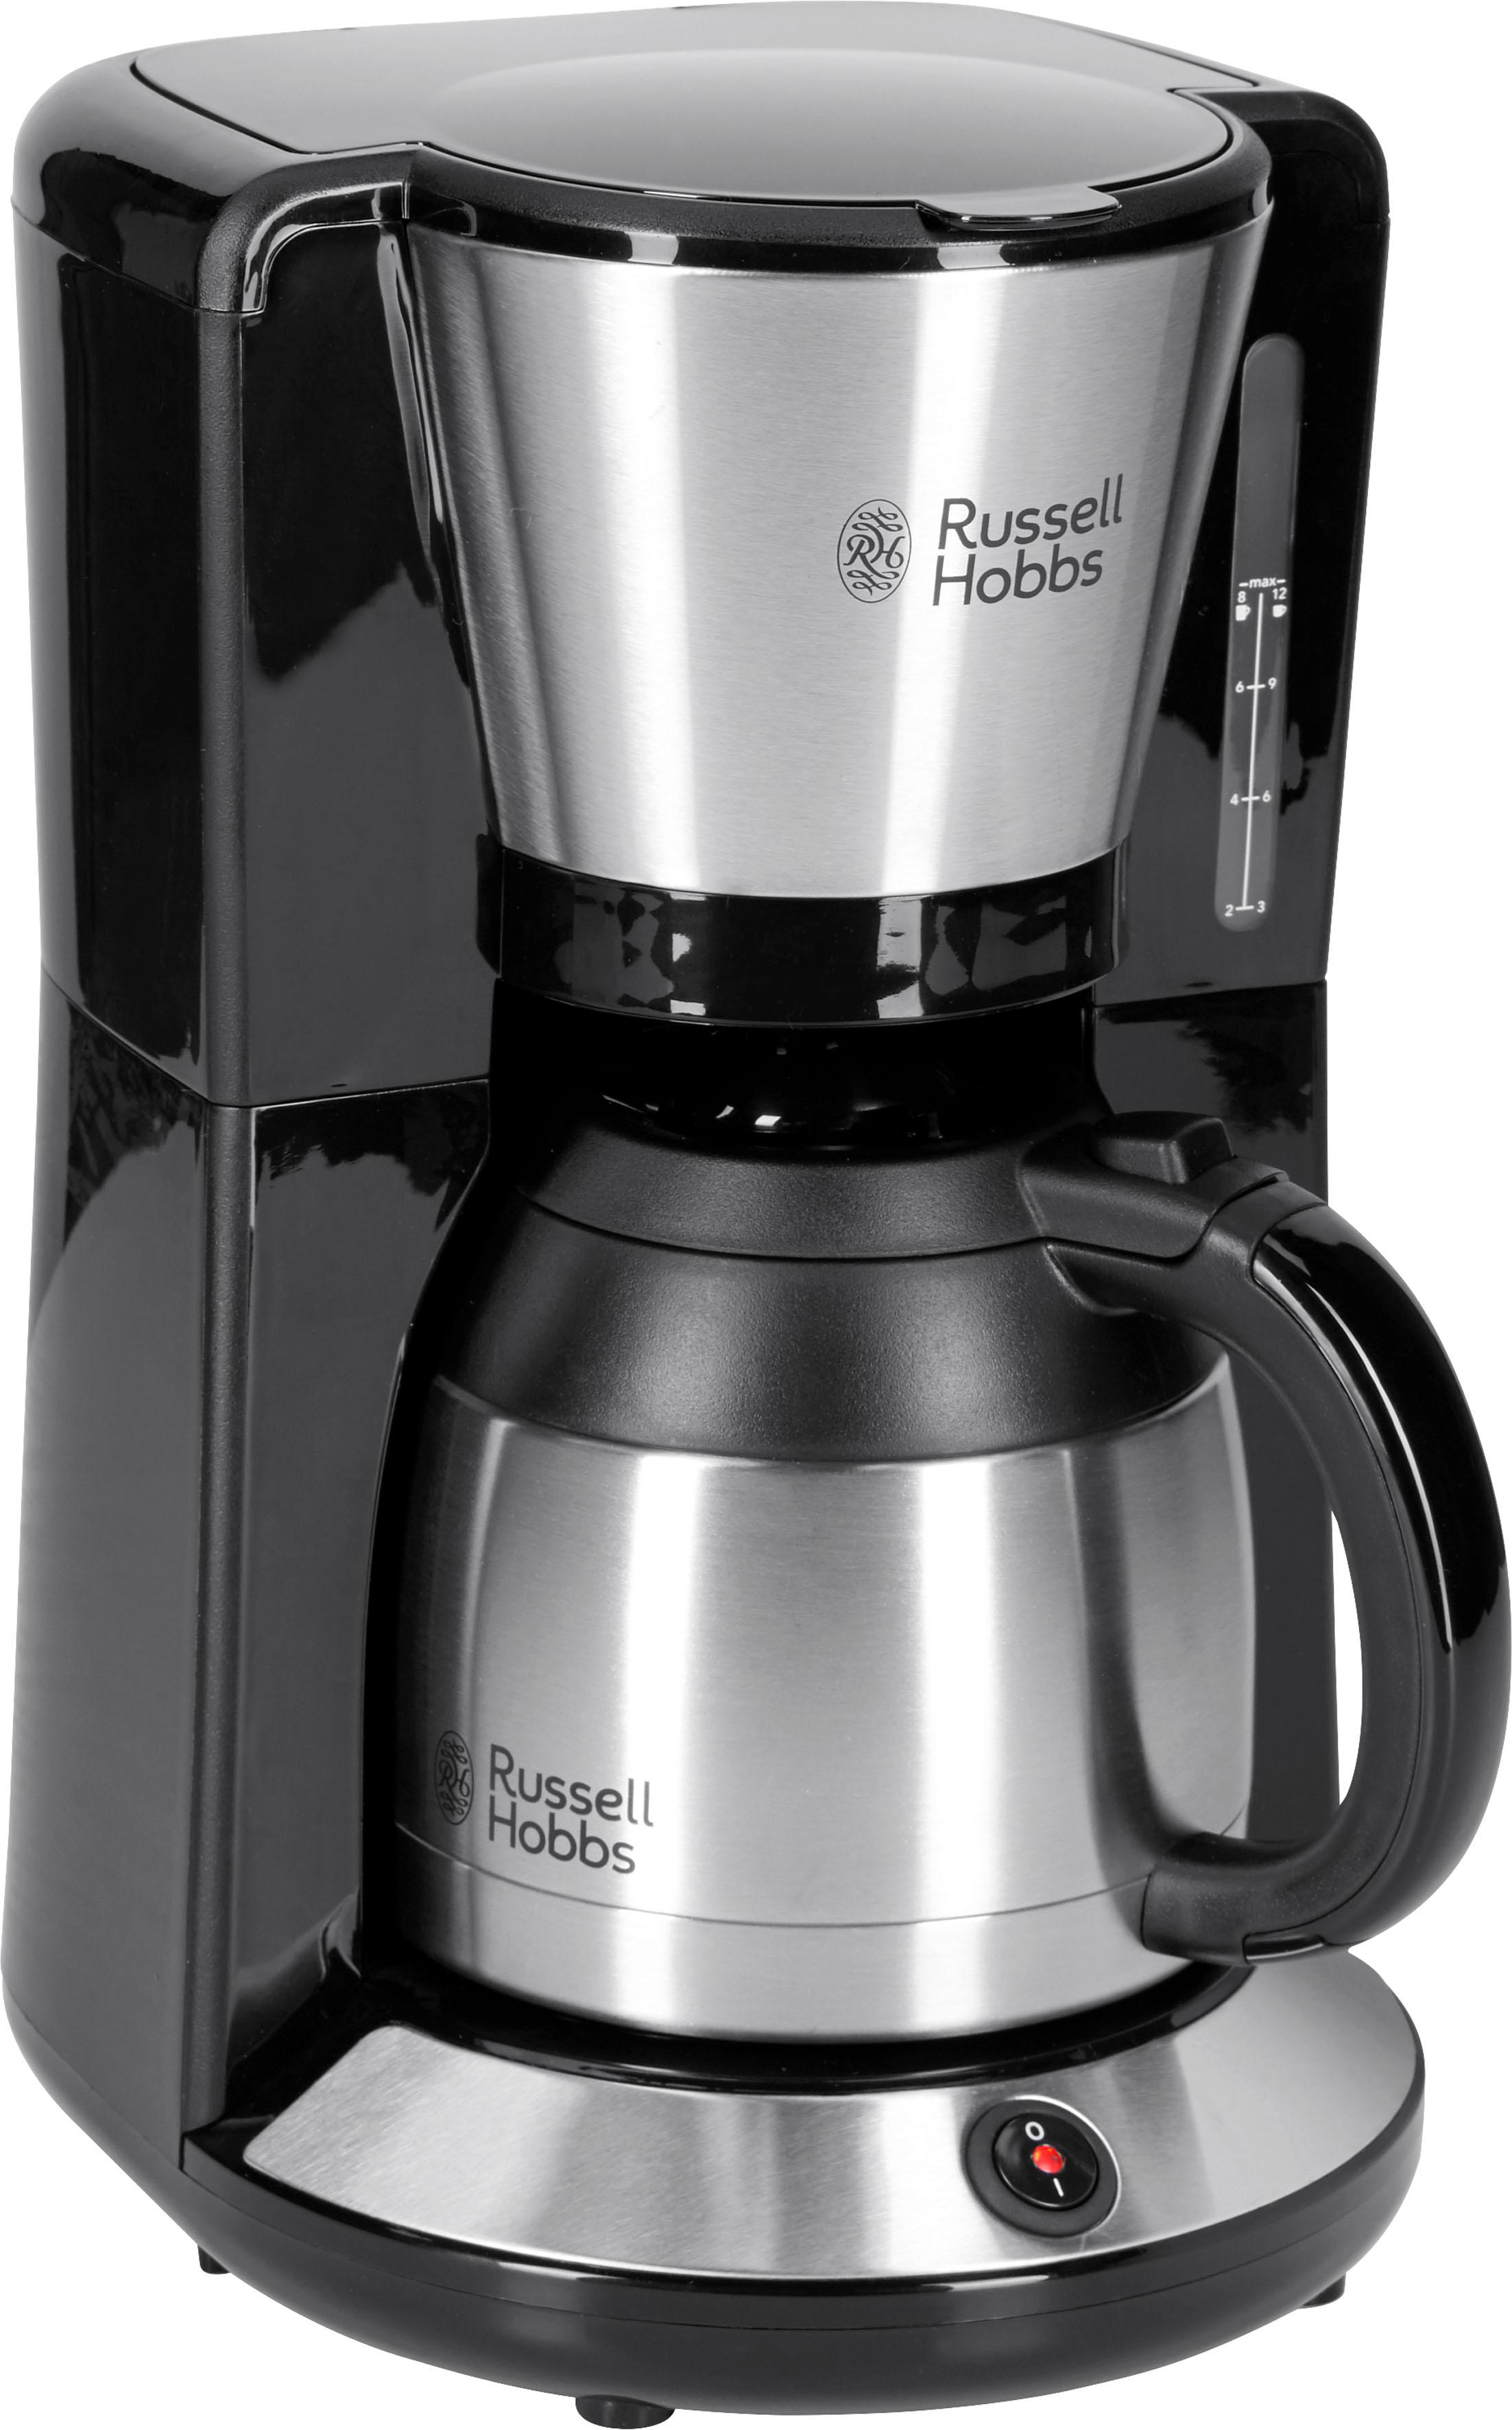 RUSSELL HOBBS Filterkaffeemaschine »Victory 24030-56«, Kaffeemaschine Glas- kaufen auf Raten Digitale 1x4